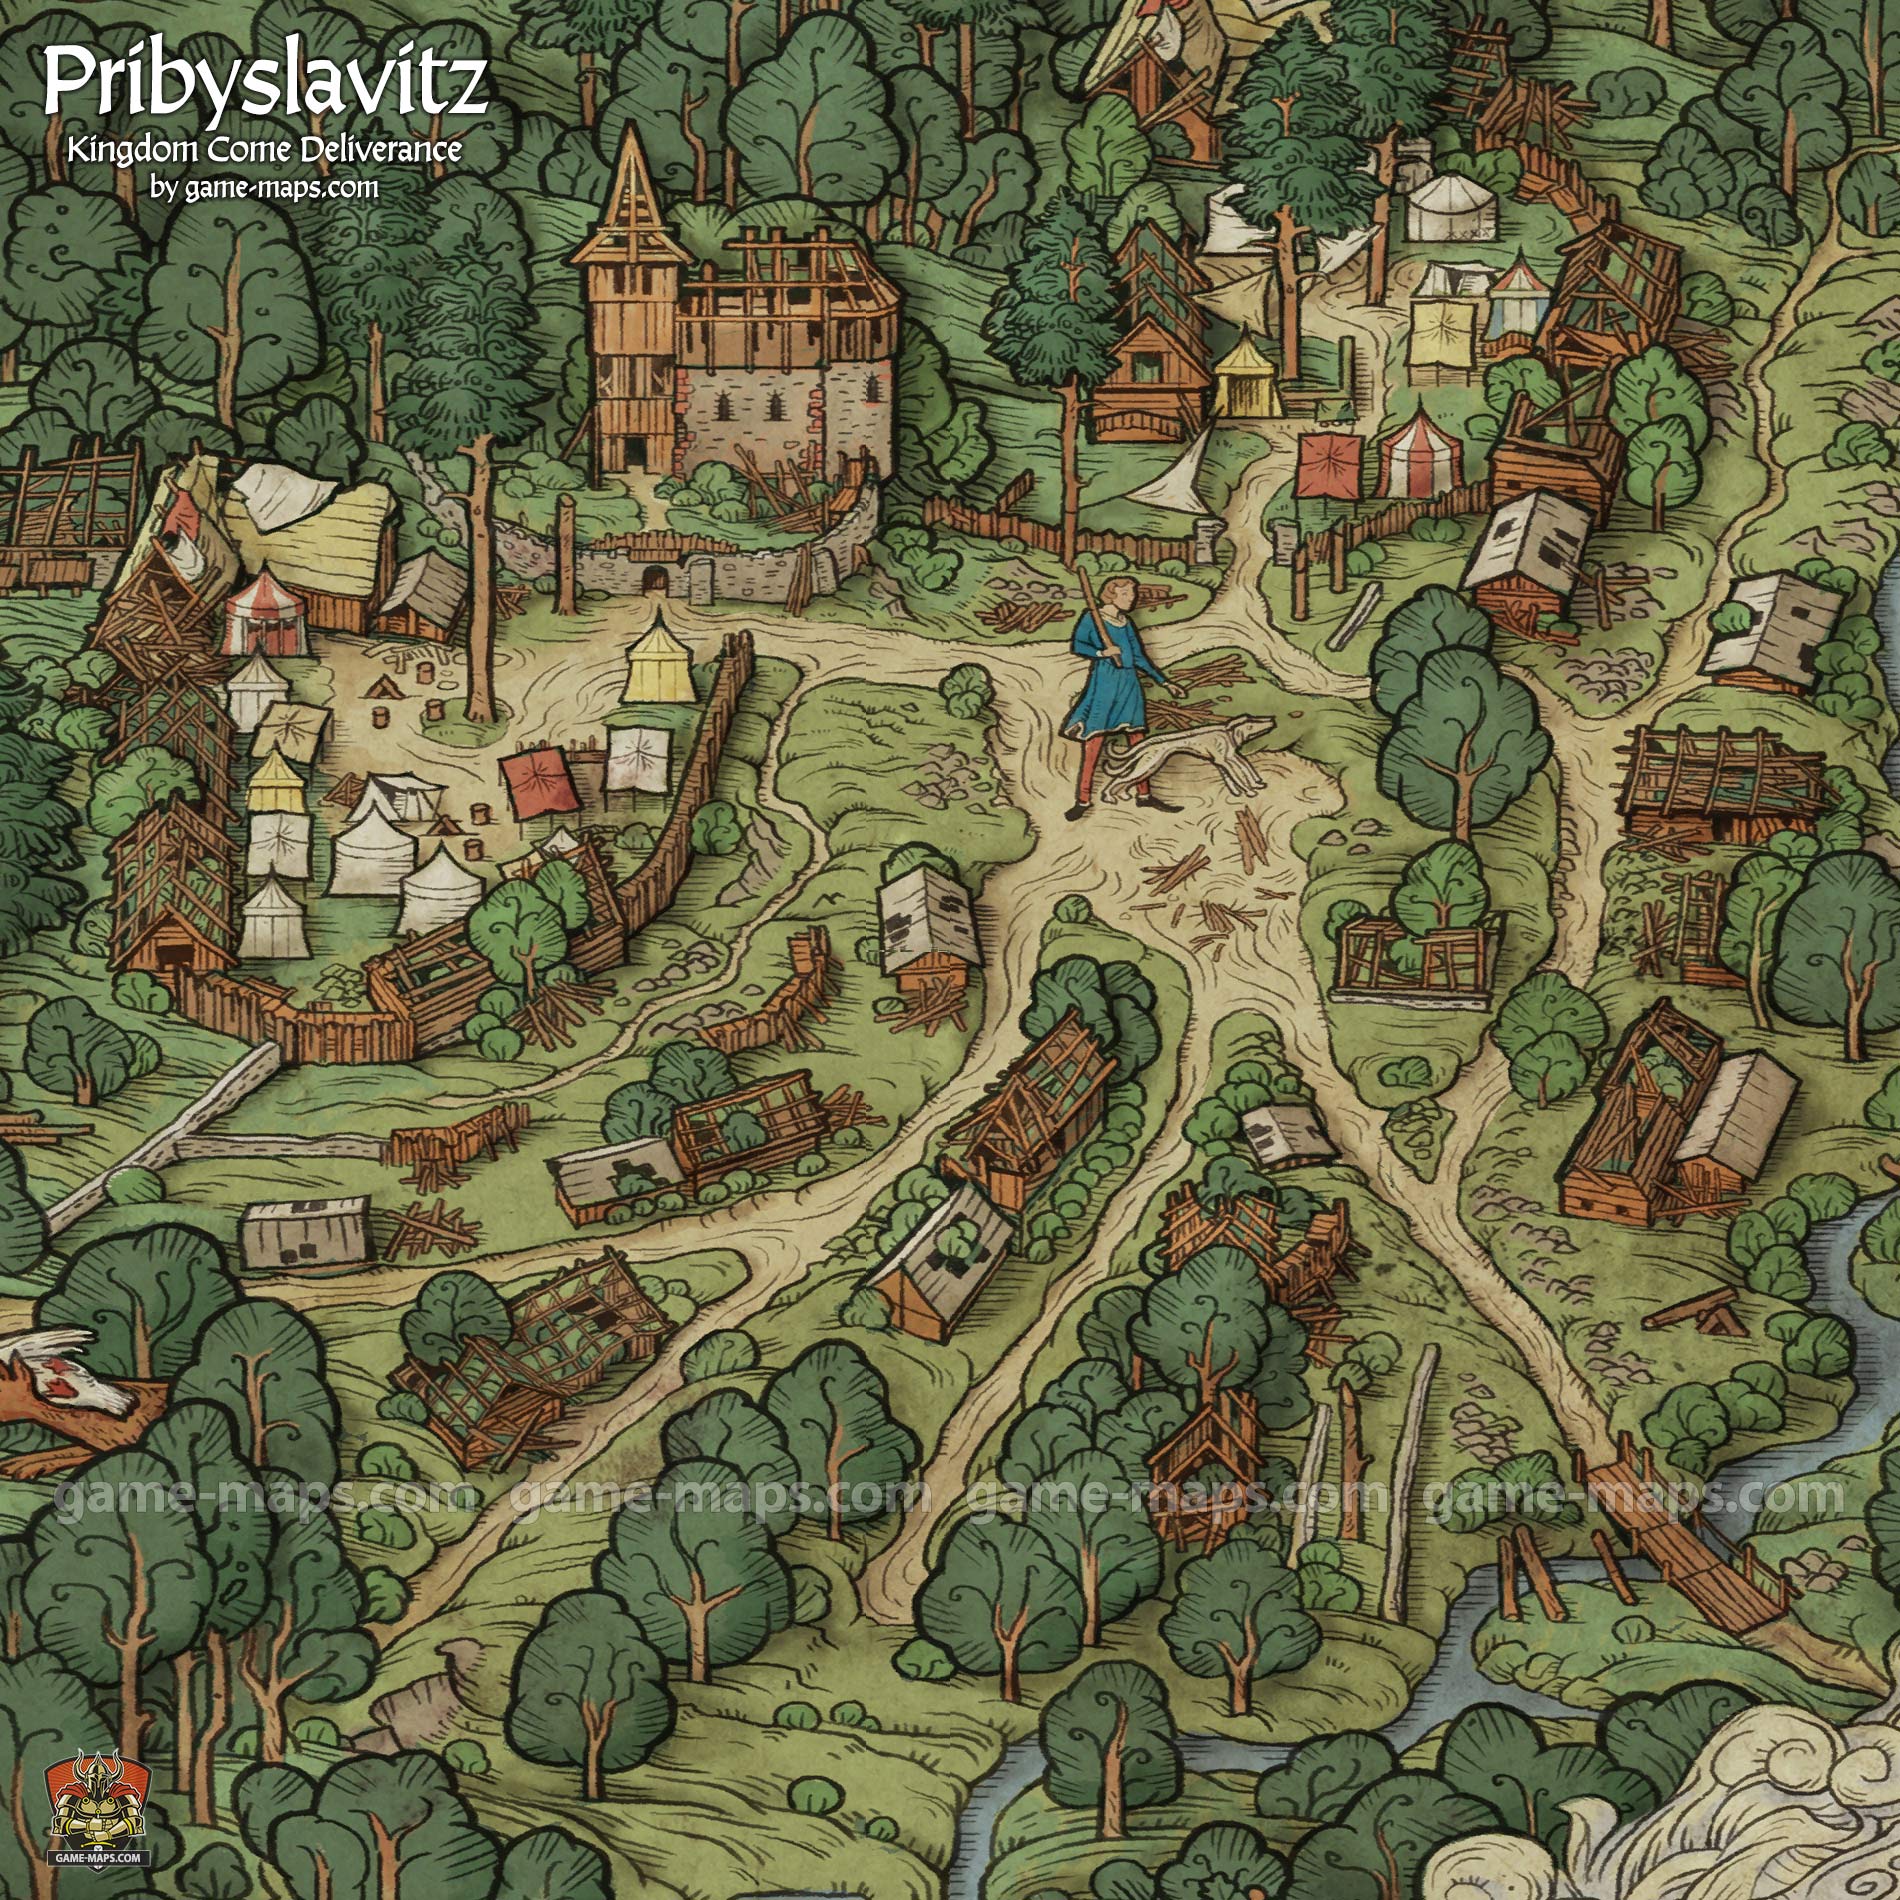 Pribyslavitz Map for Kingdom Come Deliverance